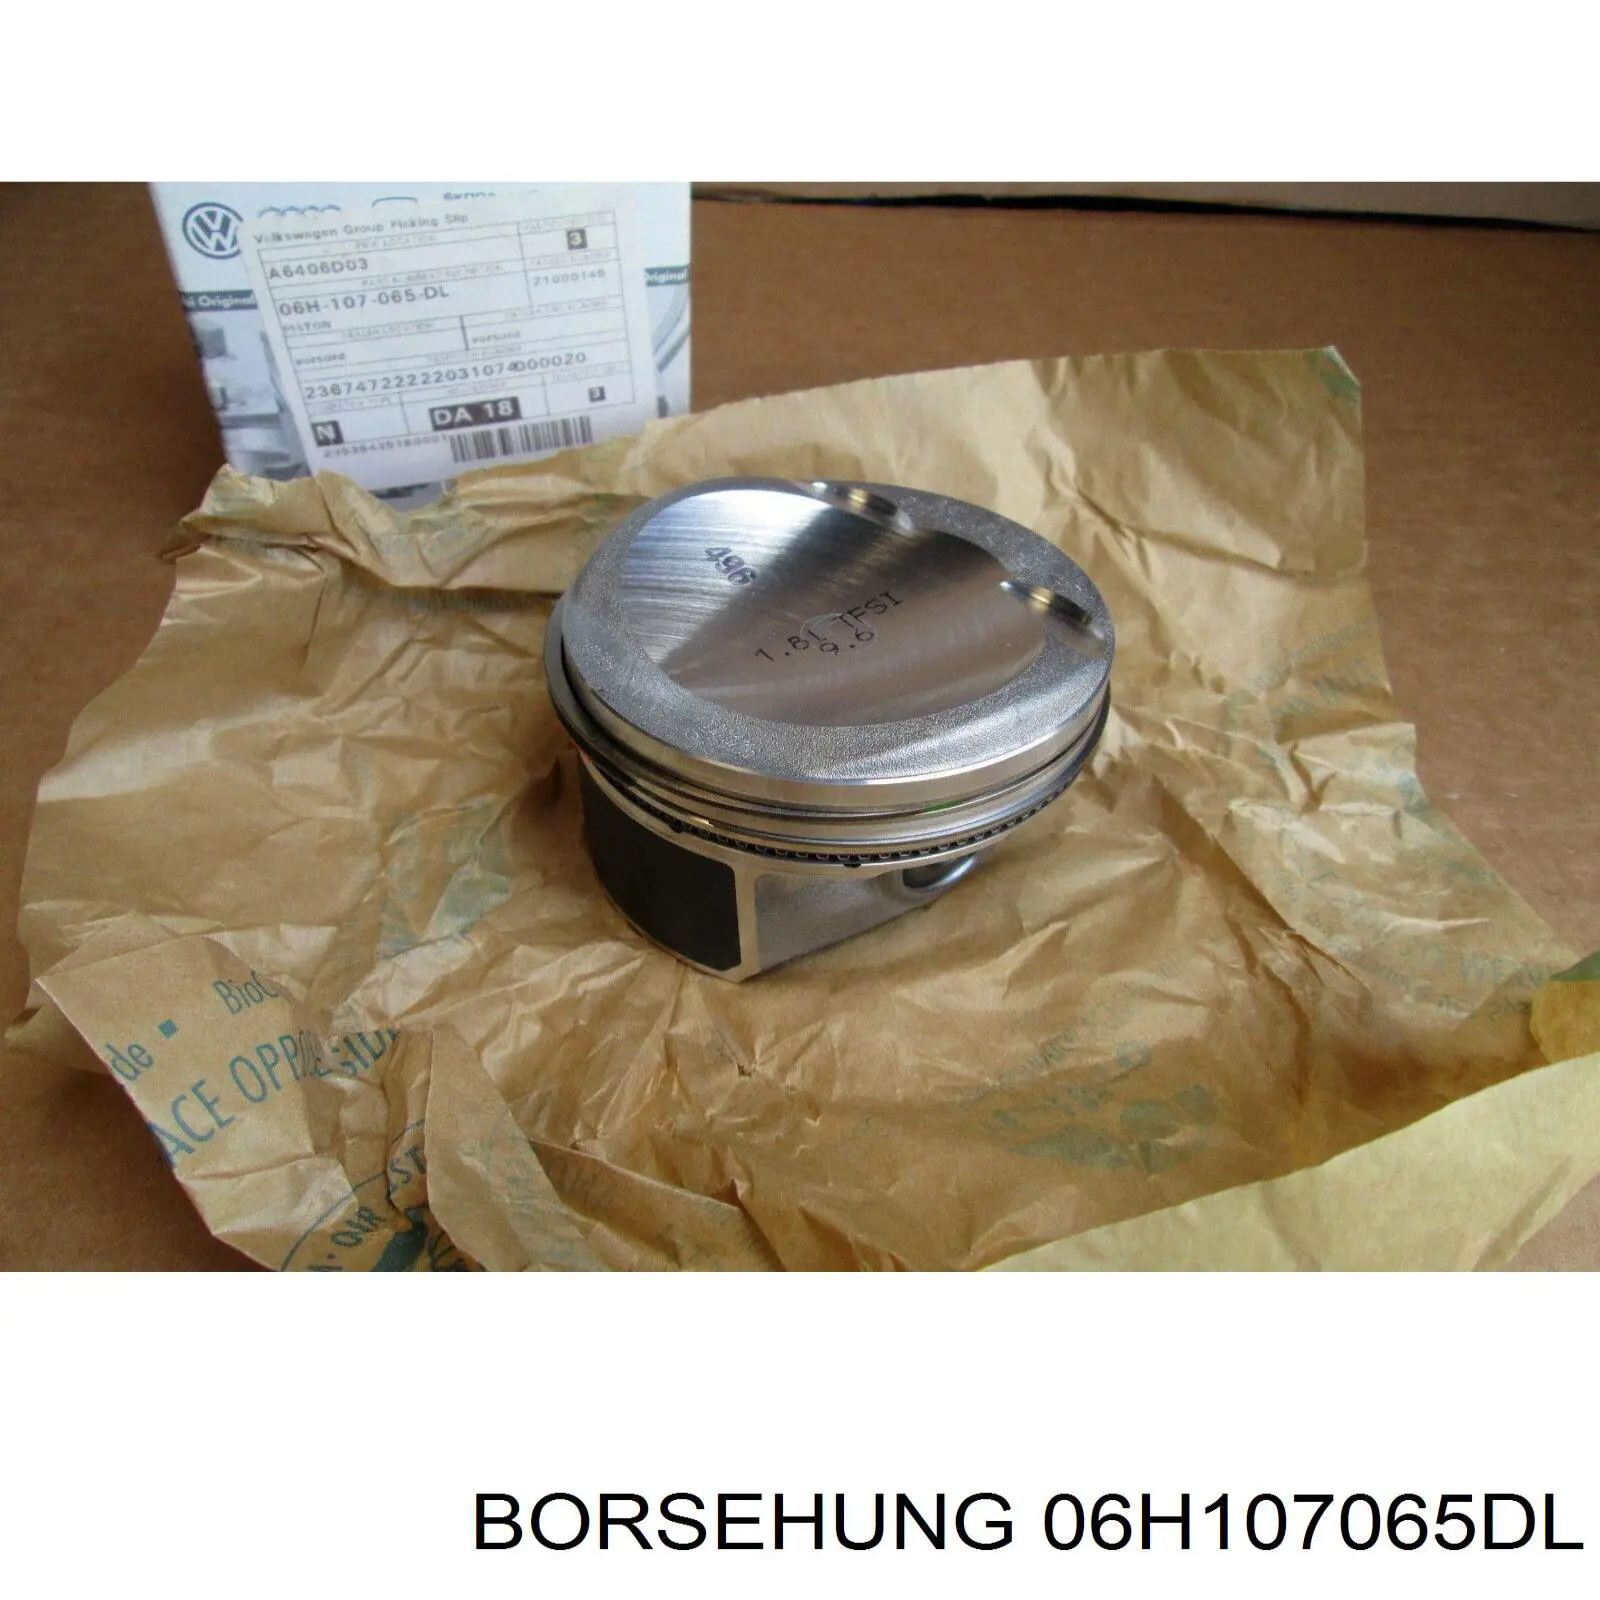 06H107065DL Borsehung поршень в комплекте на 1 цилиндр, std